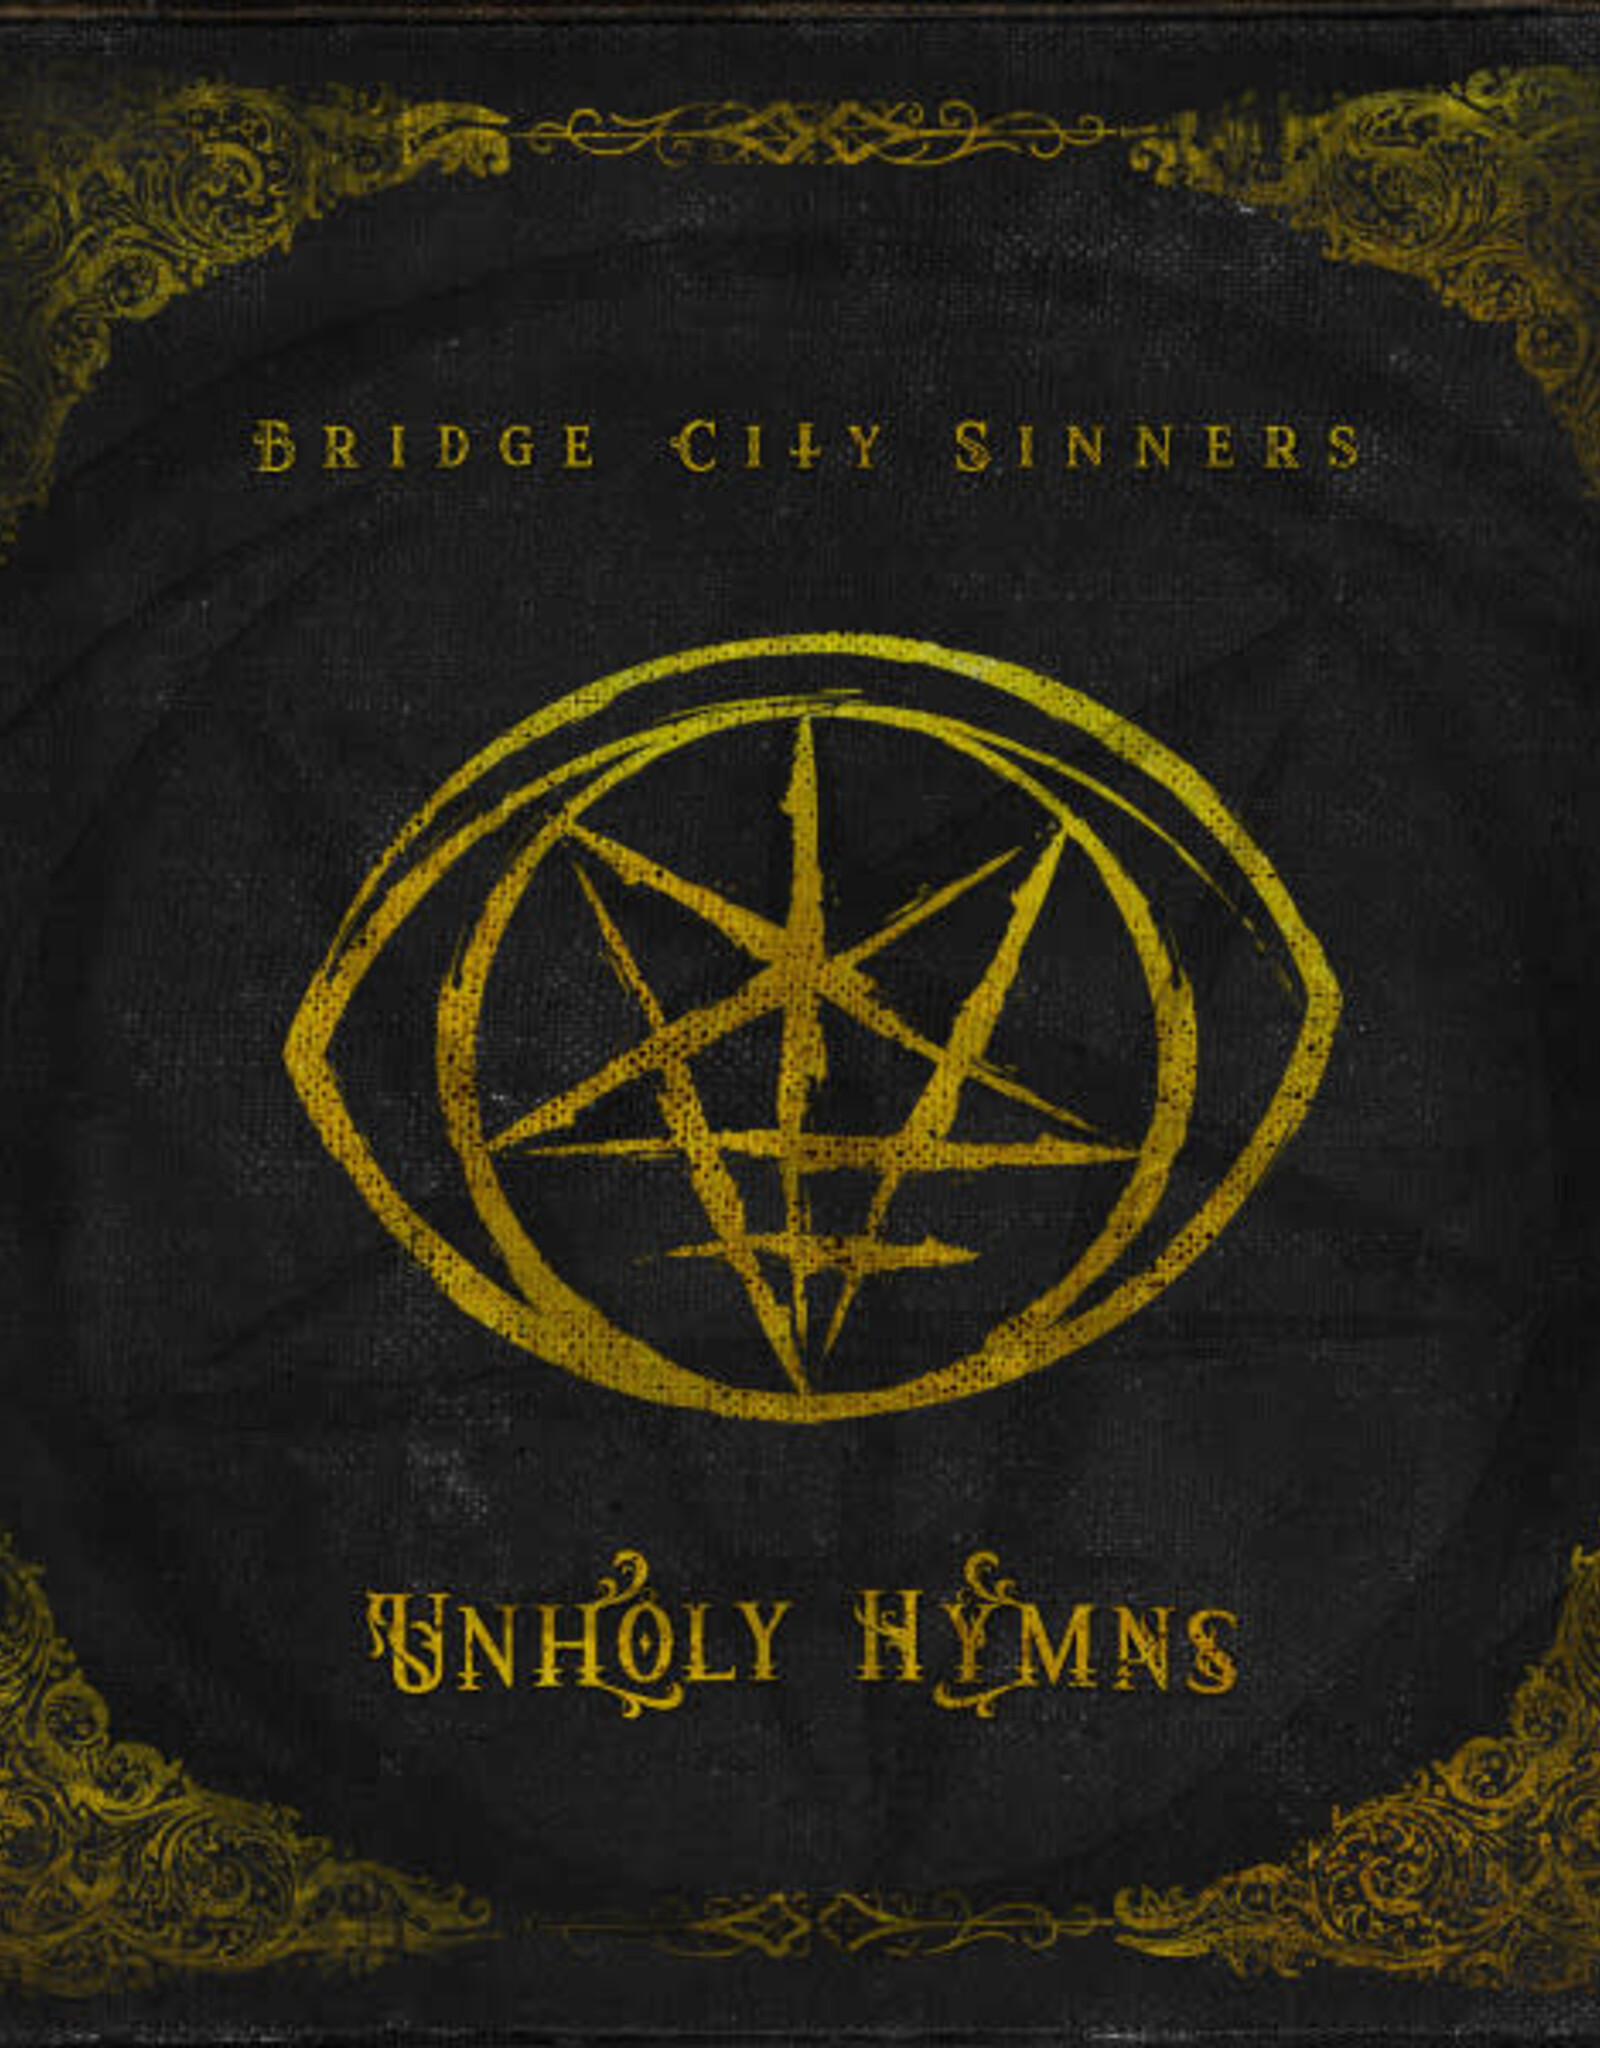 The Bridge City Sinners – Unholy Hymns